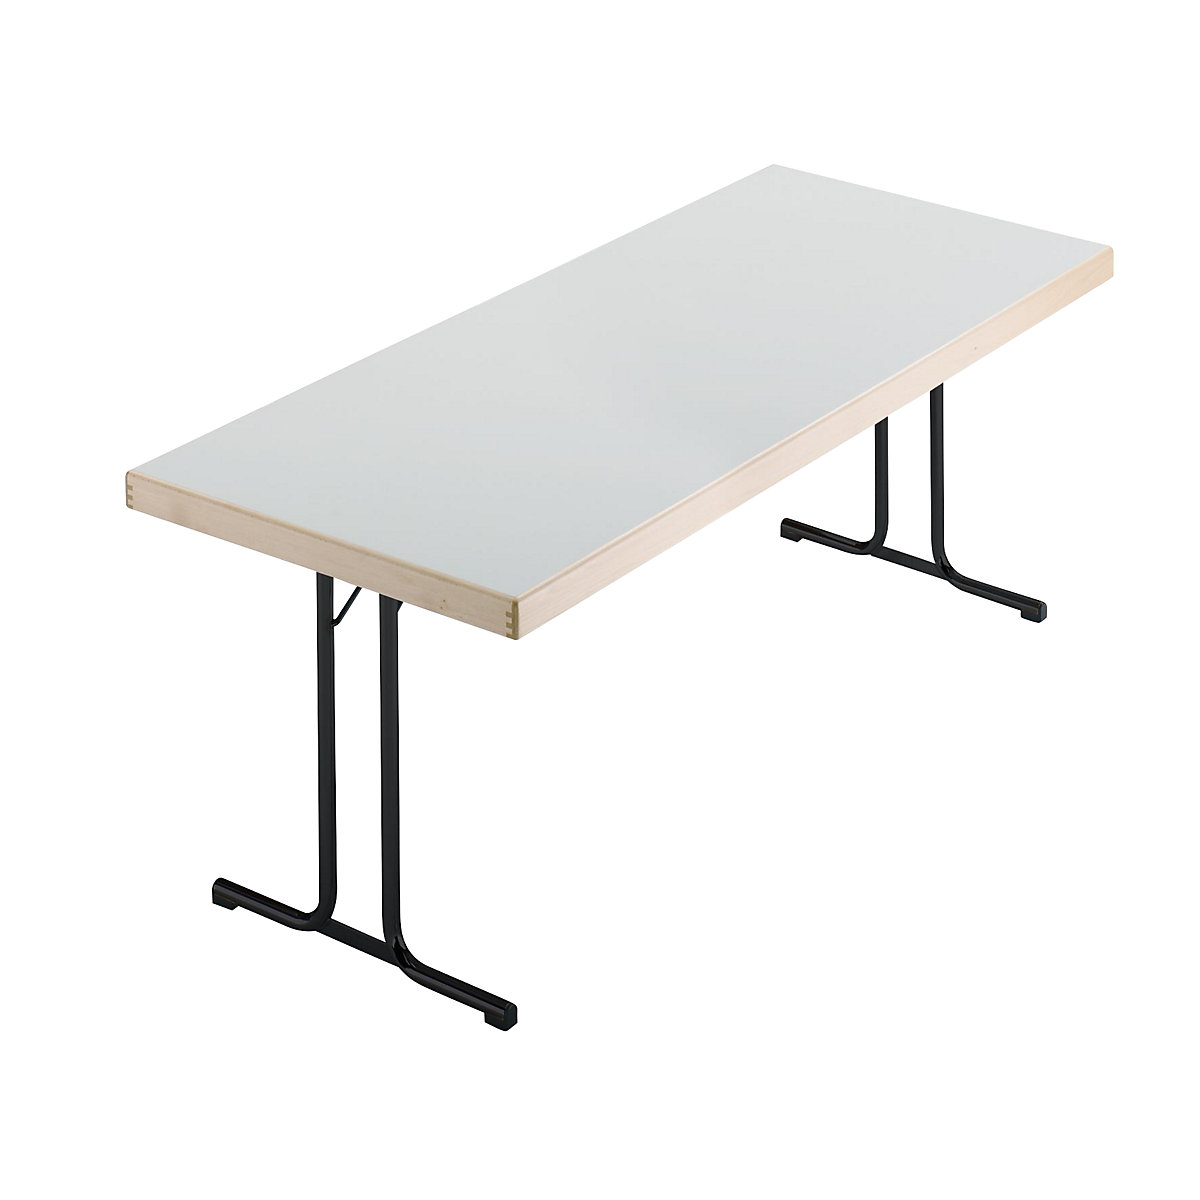 Sklopný stůl, podstavec s dvojitou T-nohou, 1500 x 800 mm, podstavec antracitový, deska svetle šedá-9